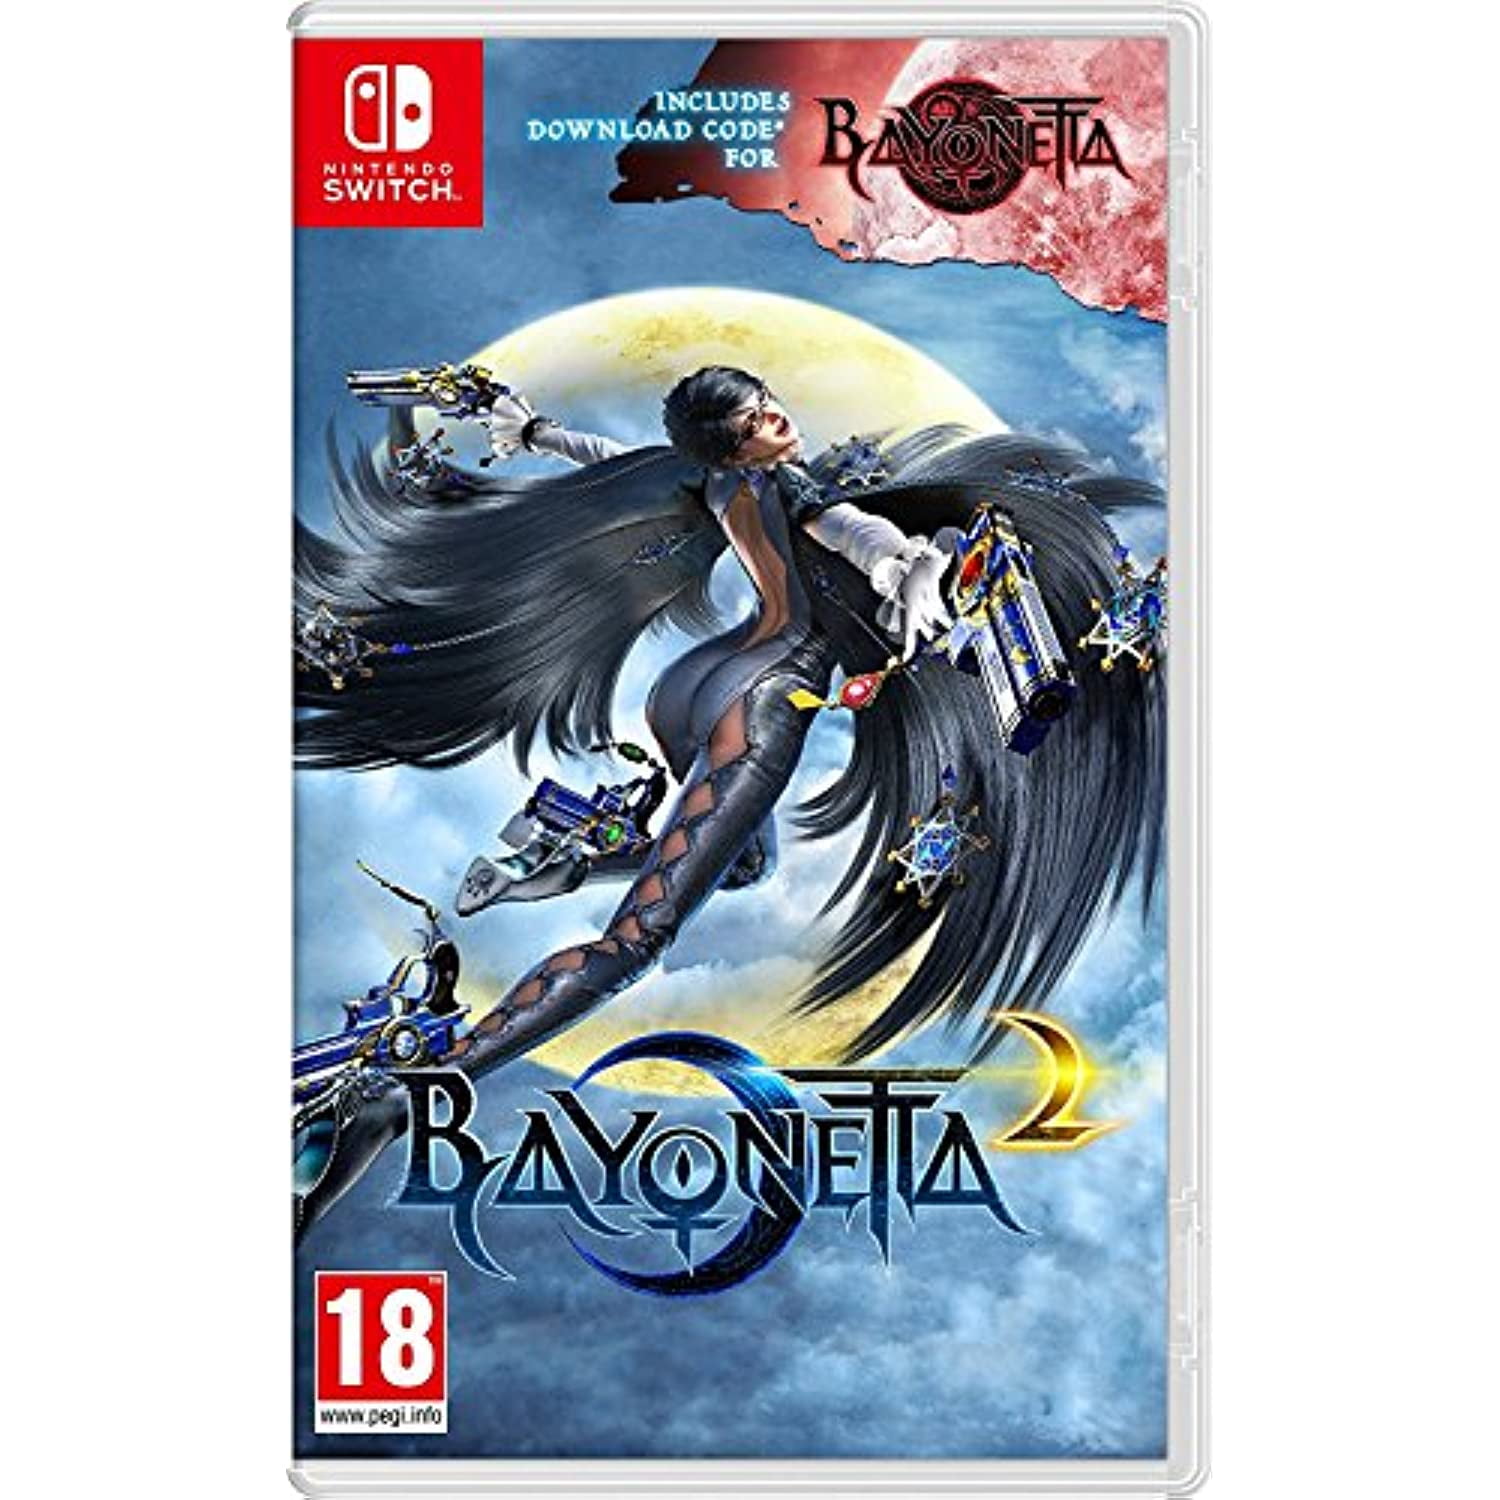 Bayonetta 2 - Nintendo Switch - World Edition - ***NEW FACTORY SEALED***  45496591861